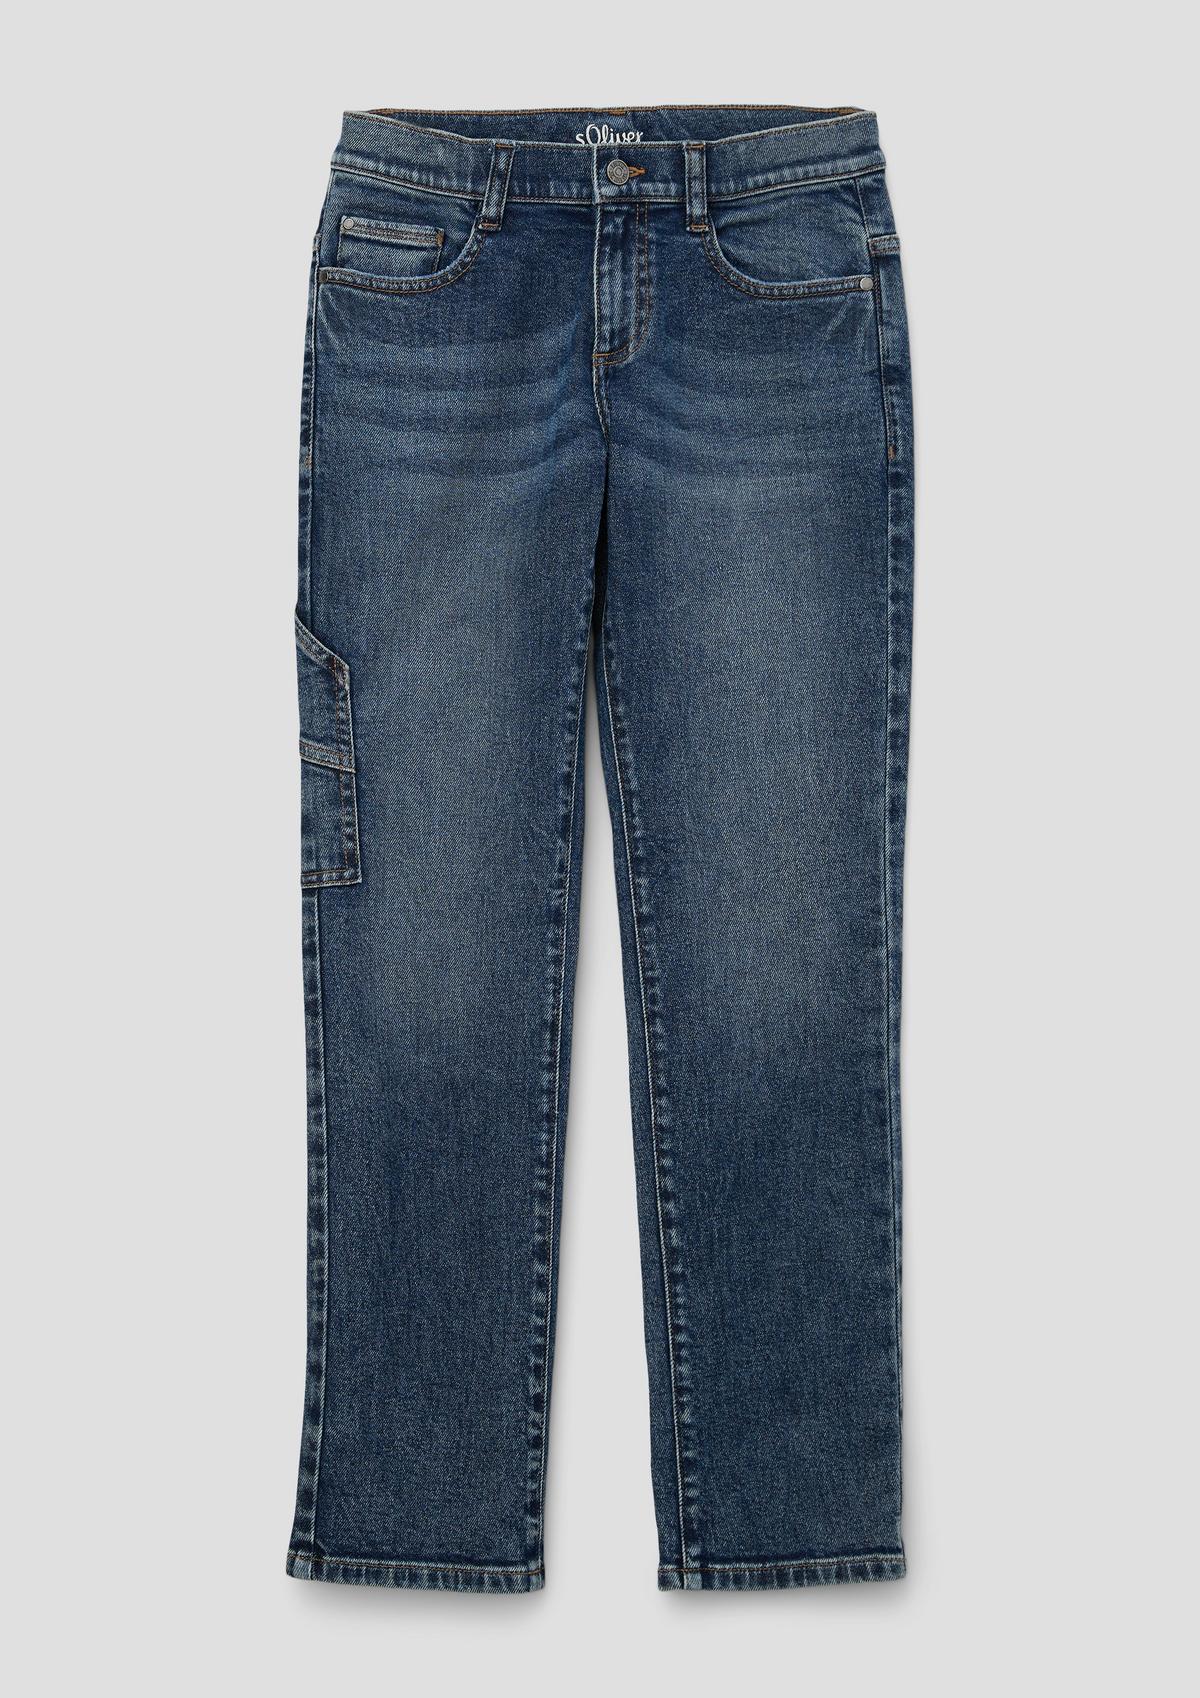 Jeans Pete / regular fit / mid rise / slim leg